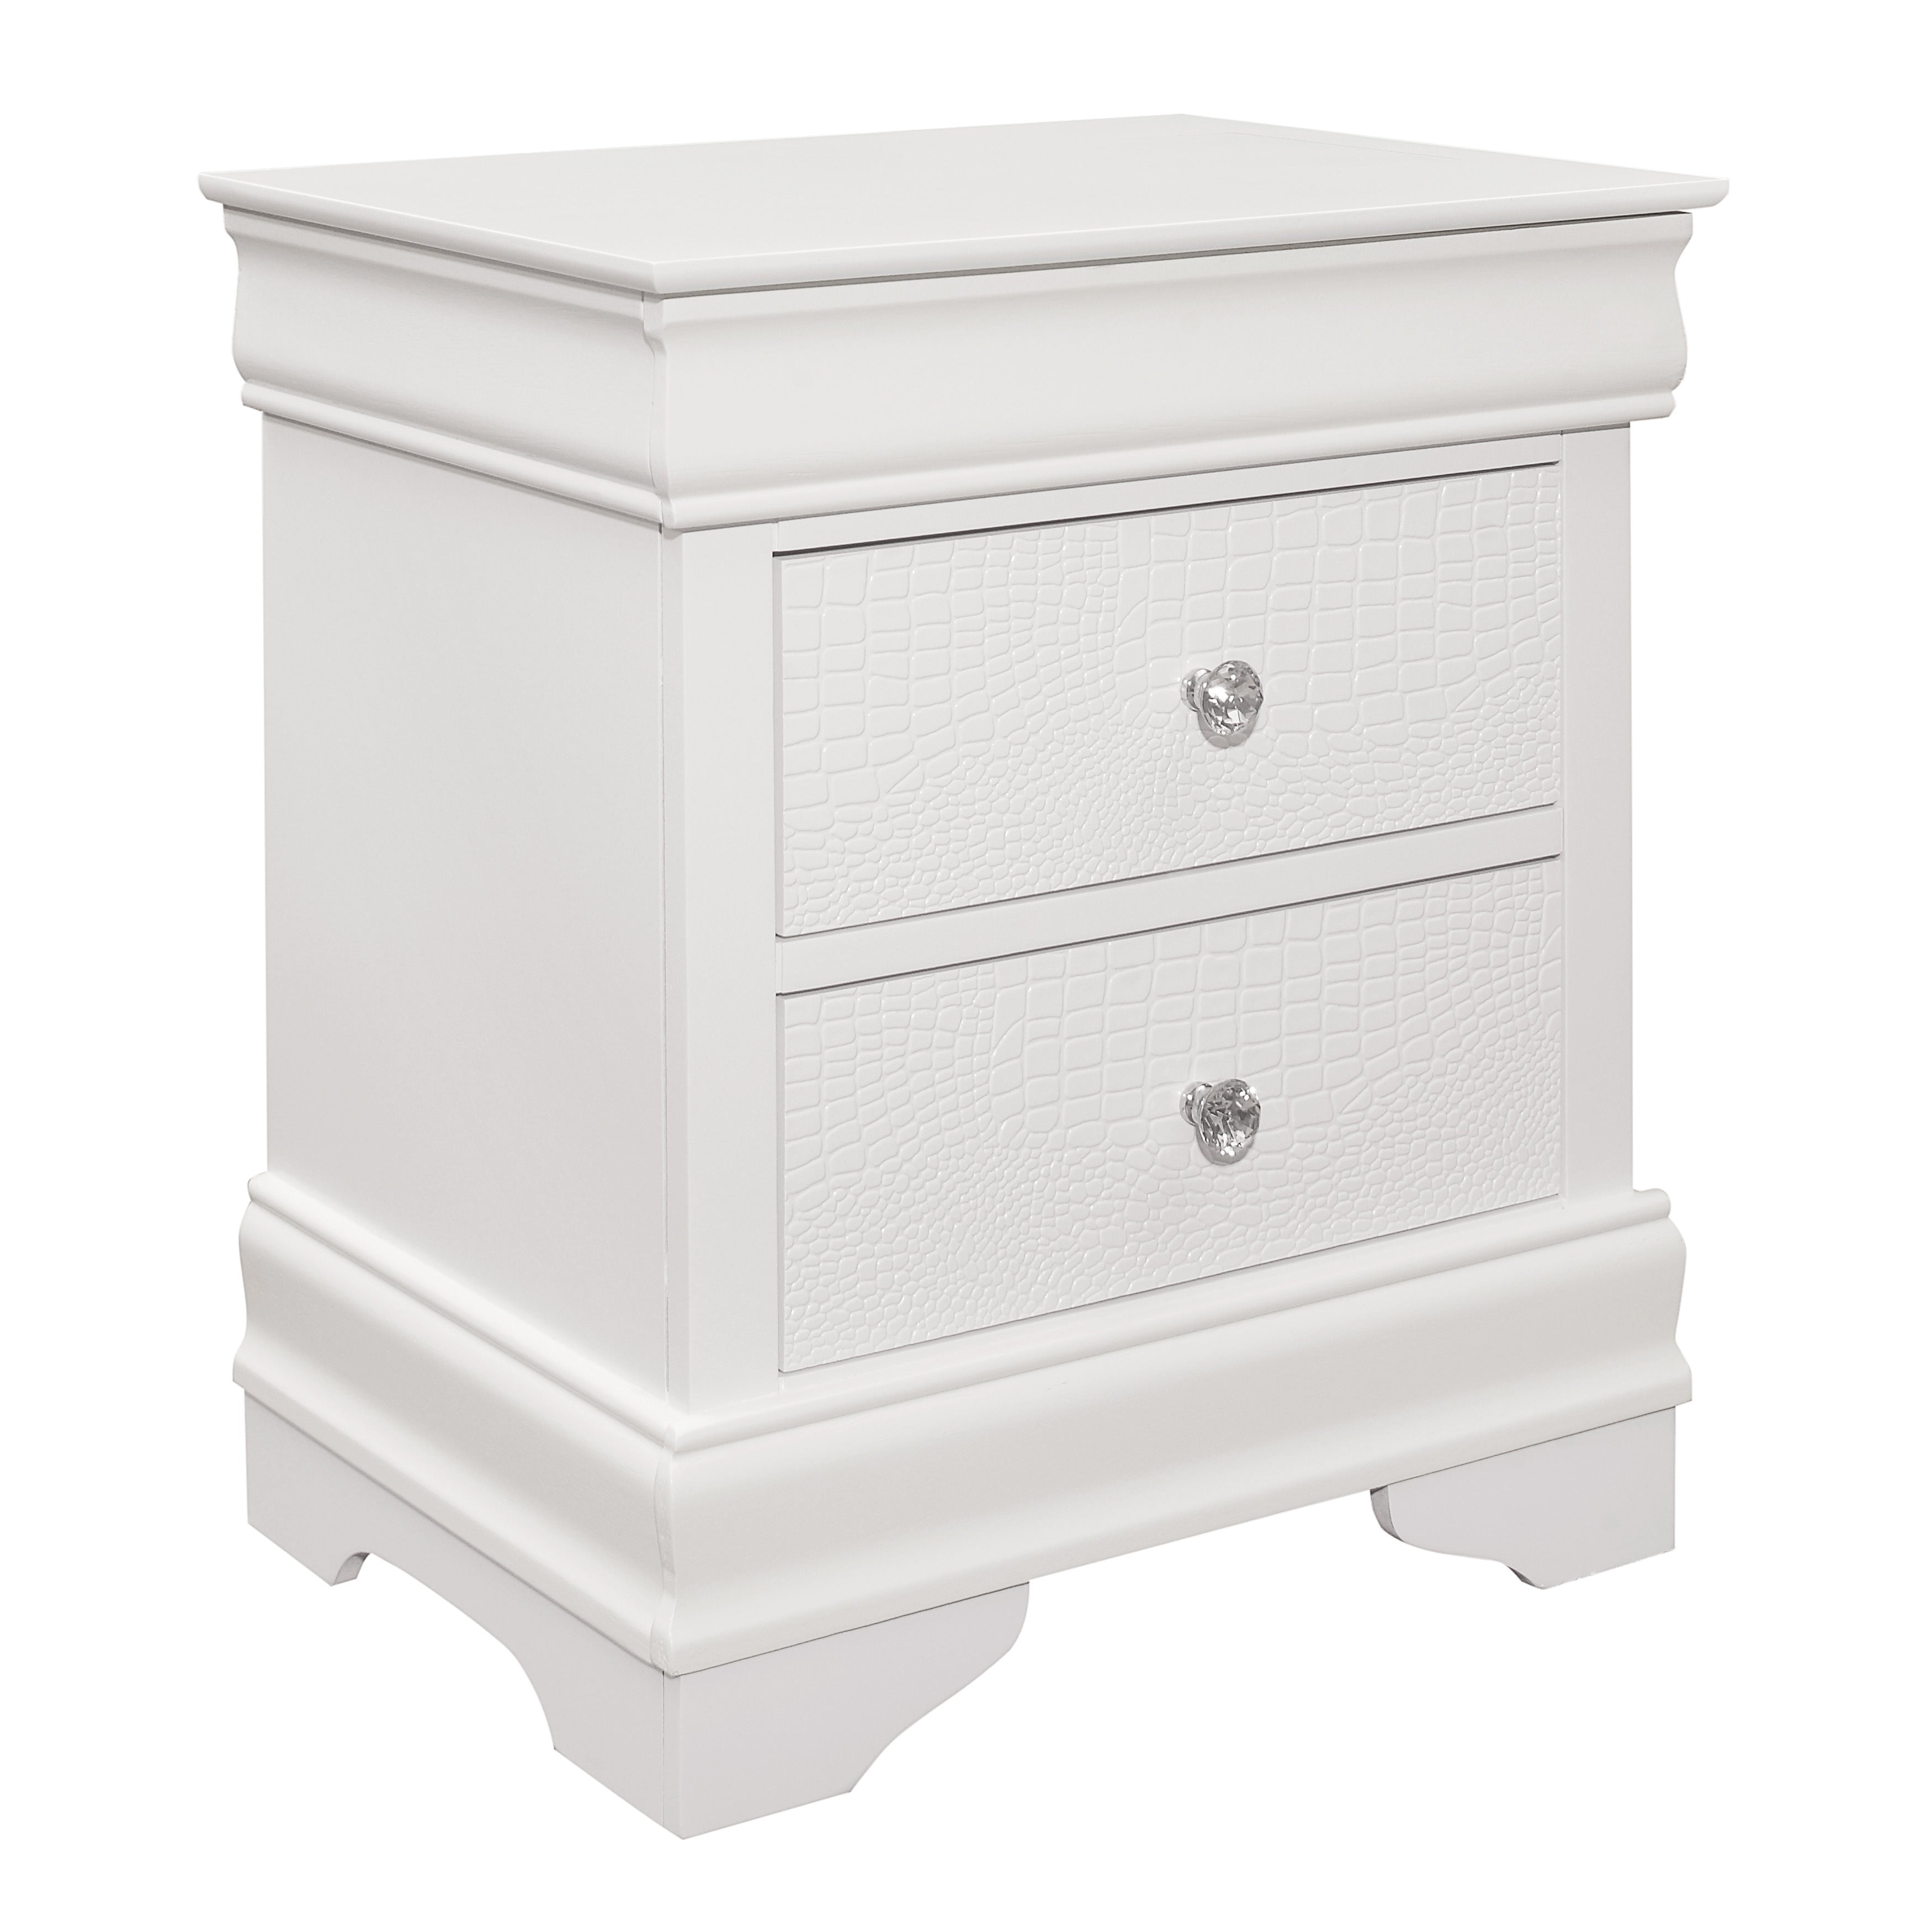 Lana White LED Upholstered Panel Bedroom Set - SET | 1556WK-1 | 1556W-3 | 1556W-5 | 1556W-6 | 1556W-4 | 1556W-9 - Bien Home Furniture &amp; Electronics